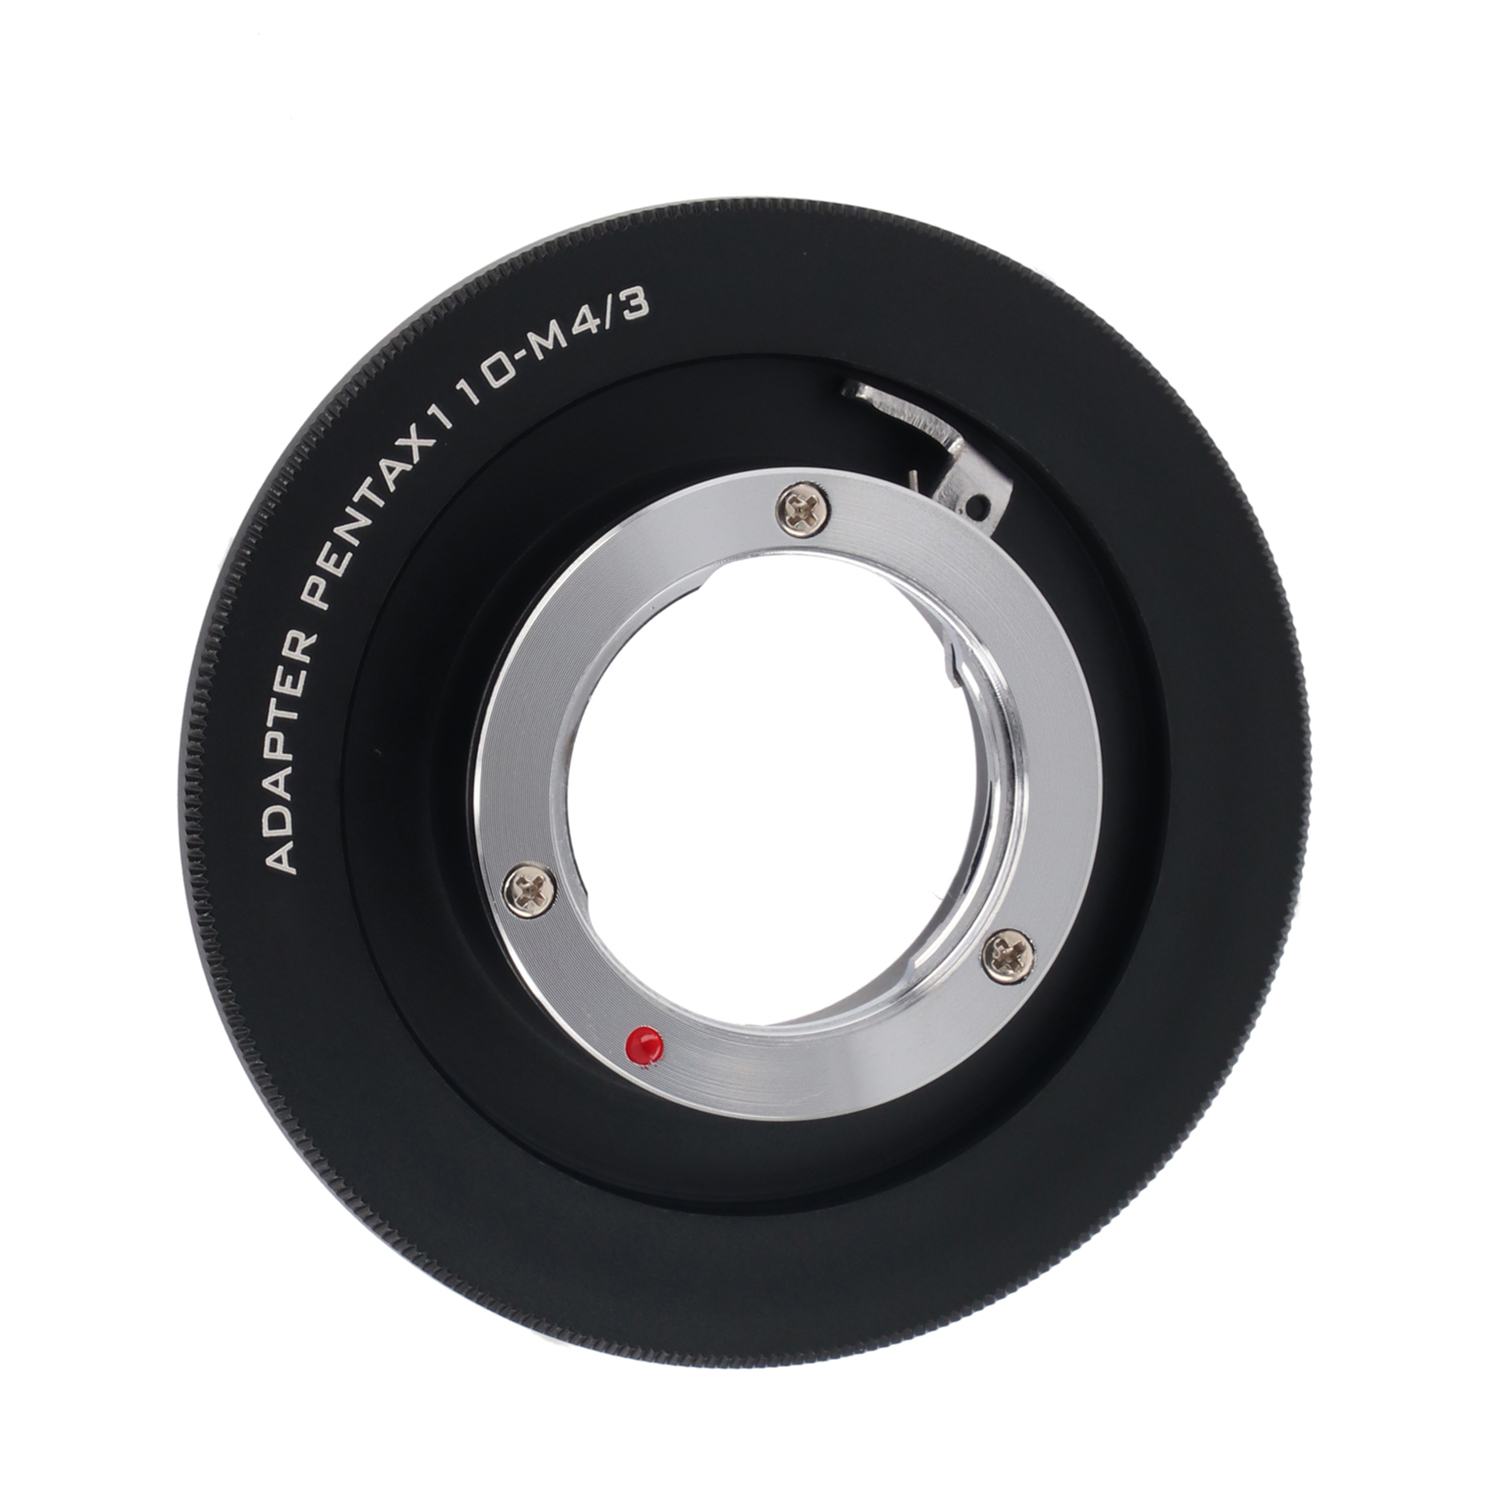 Objektivadapter für Pentax 110 Objektive an Micro 4/3 Kameras